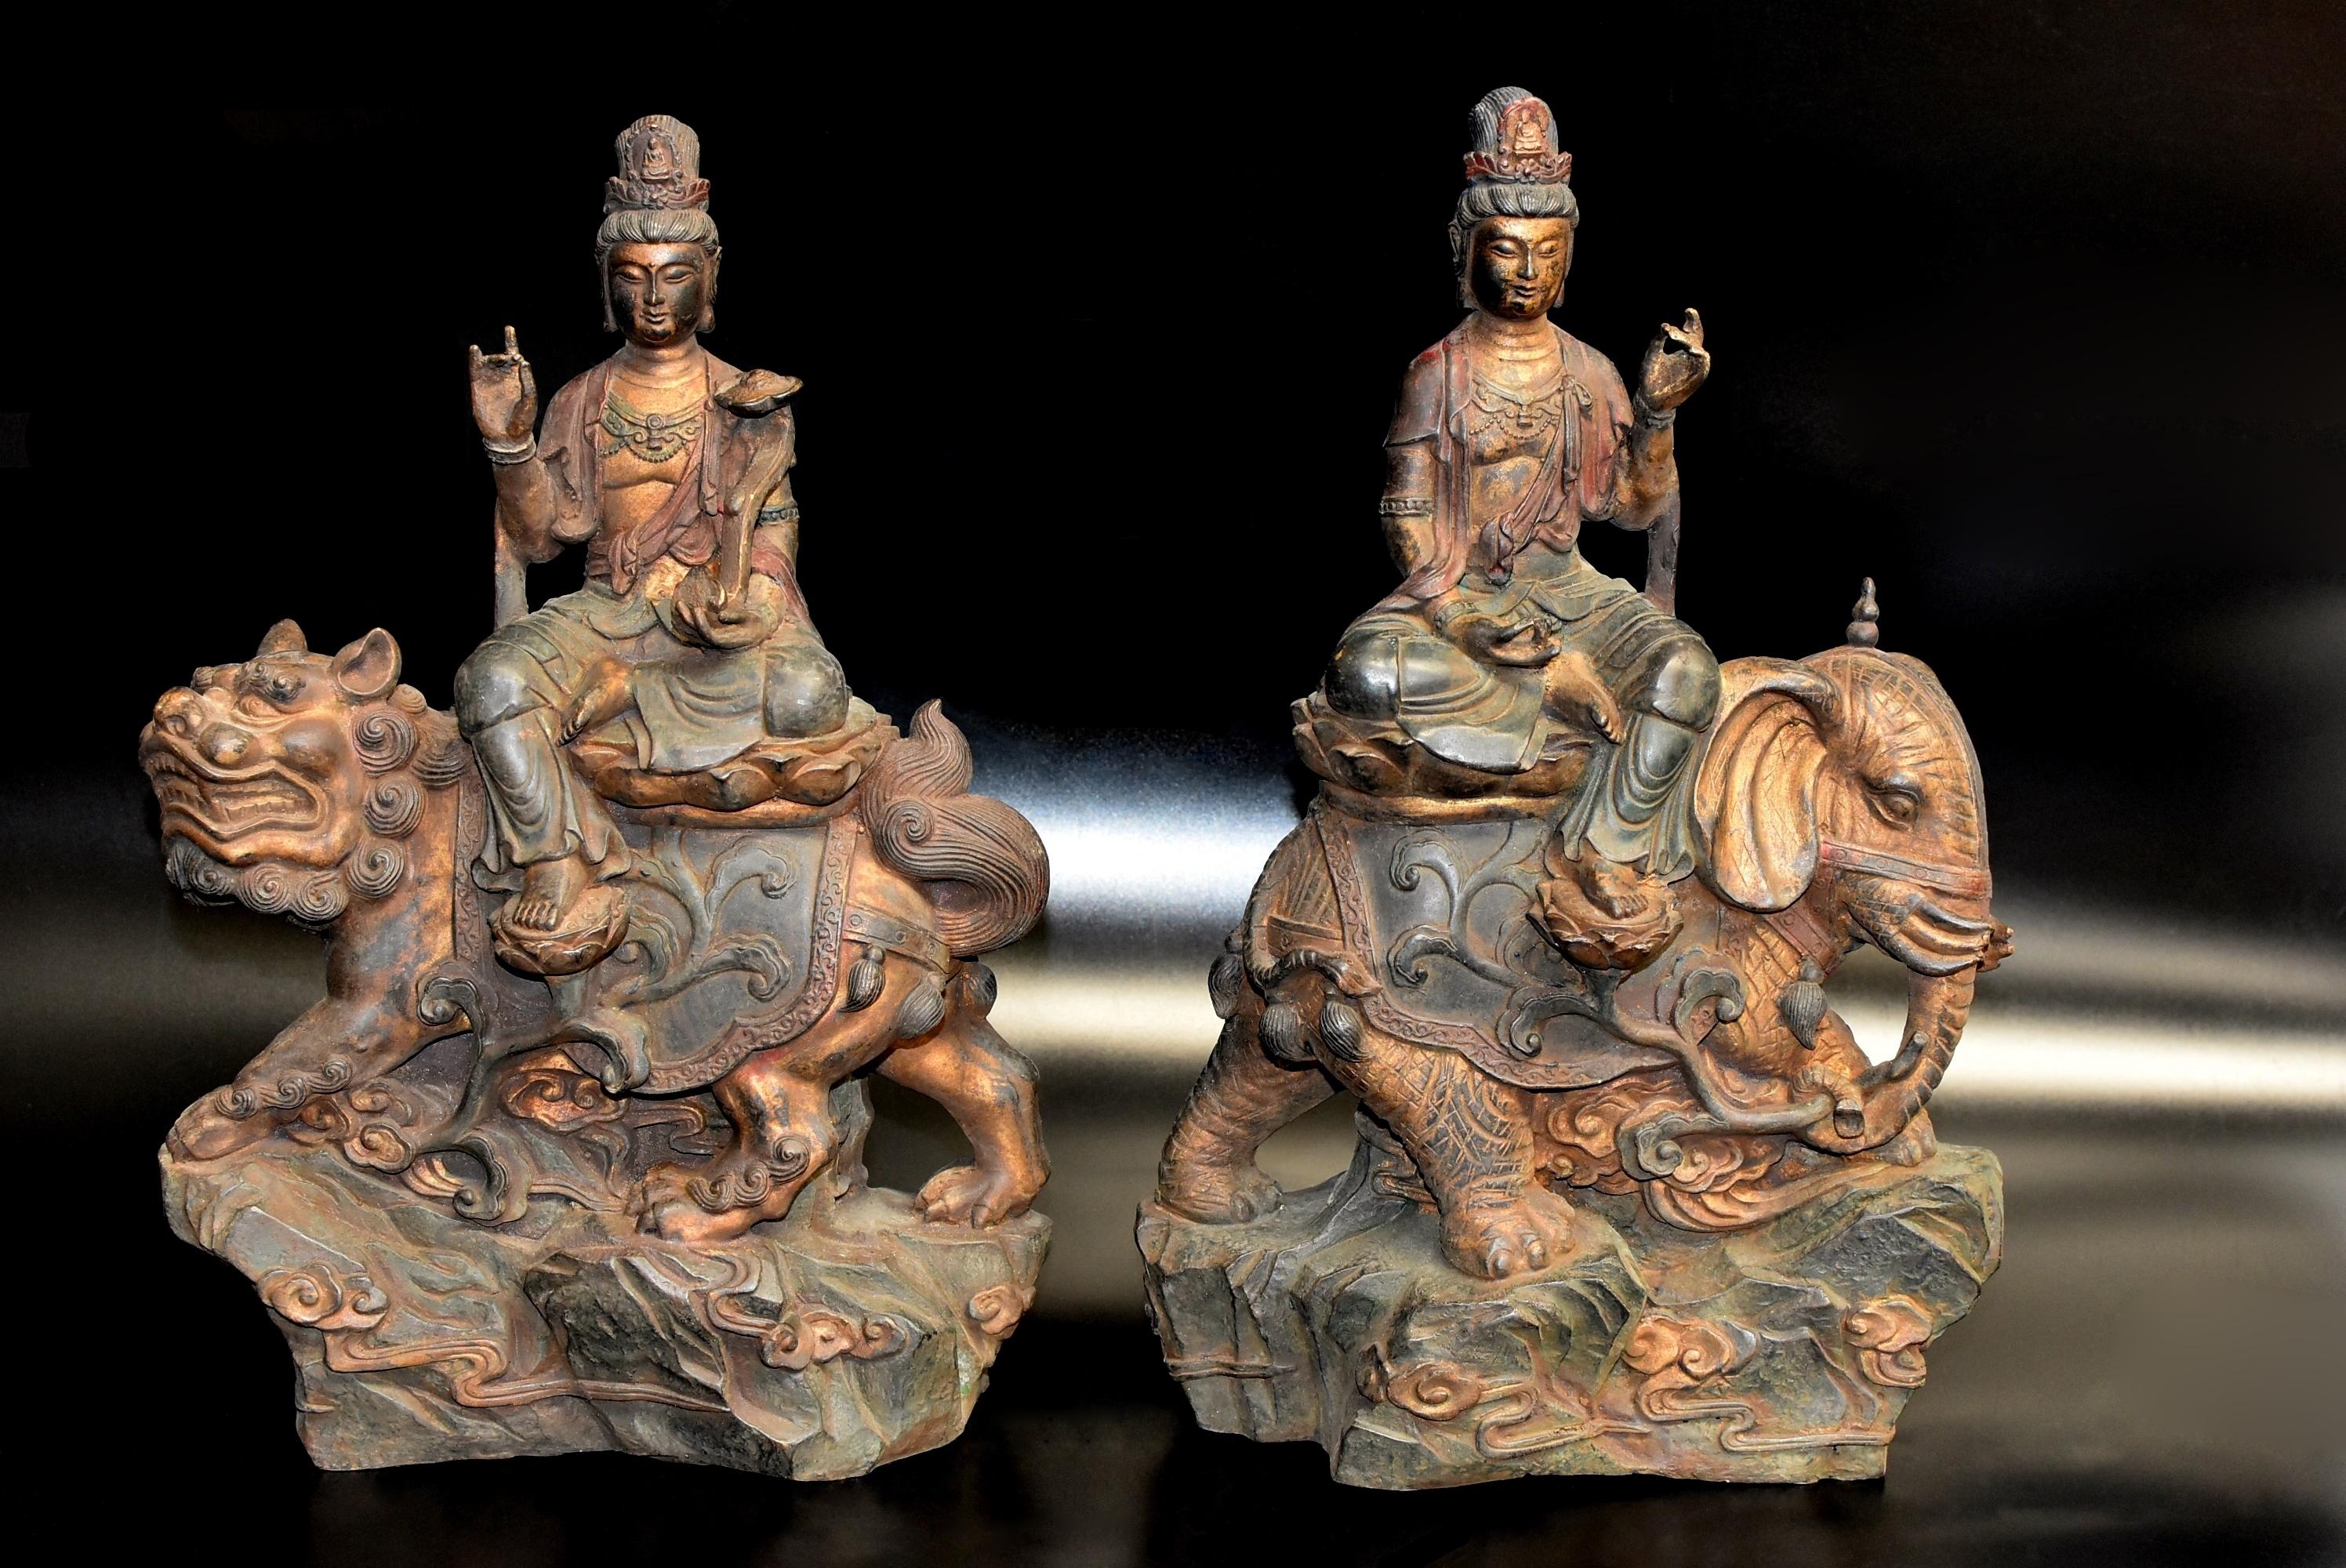 A pair of beautiful bronze statues of Avalokiteshvara. The Bodhisattvas are seated in lalitasana, the 